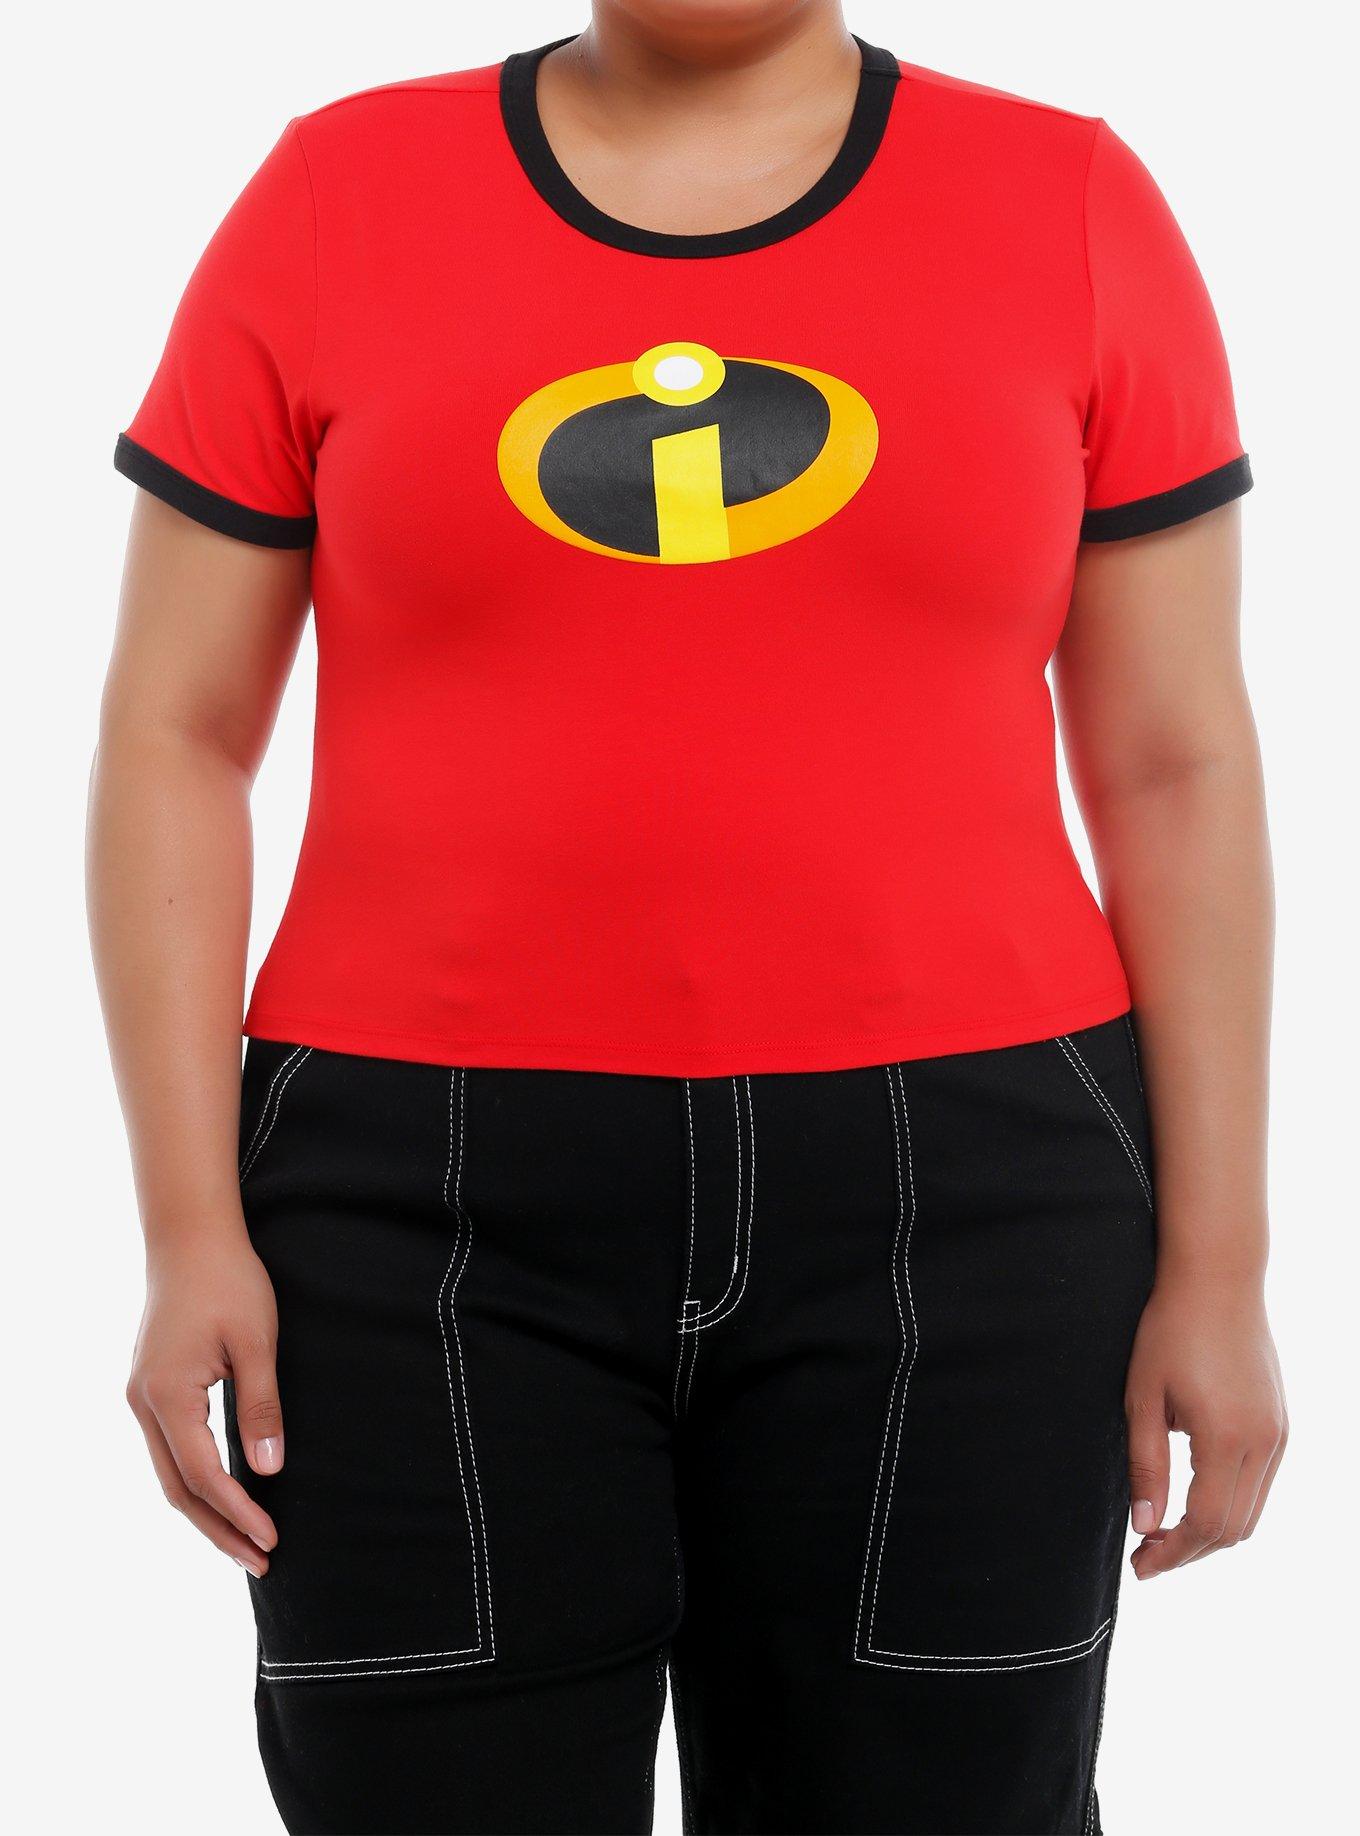 Disney Pixar The Incredibles Costume Girls Ringer Baby T-Shirt Plus